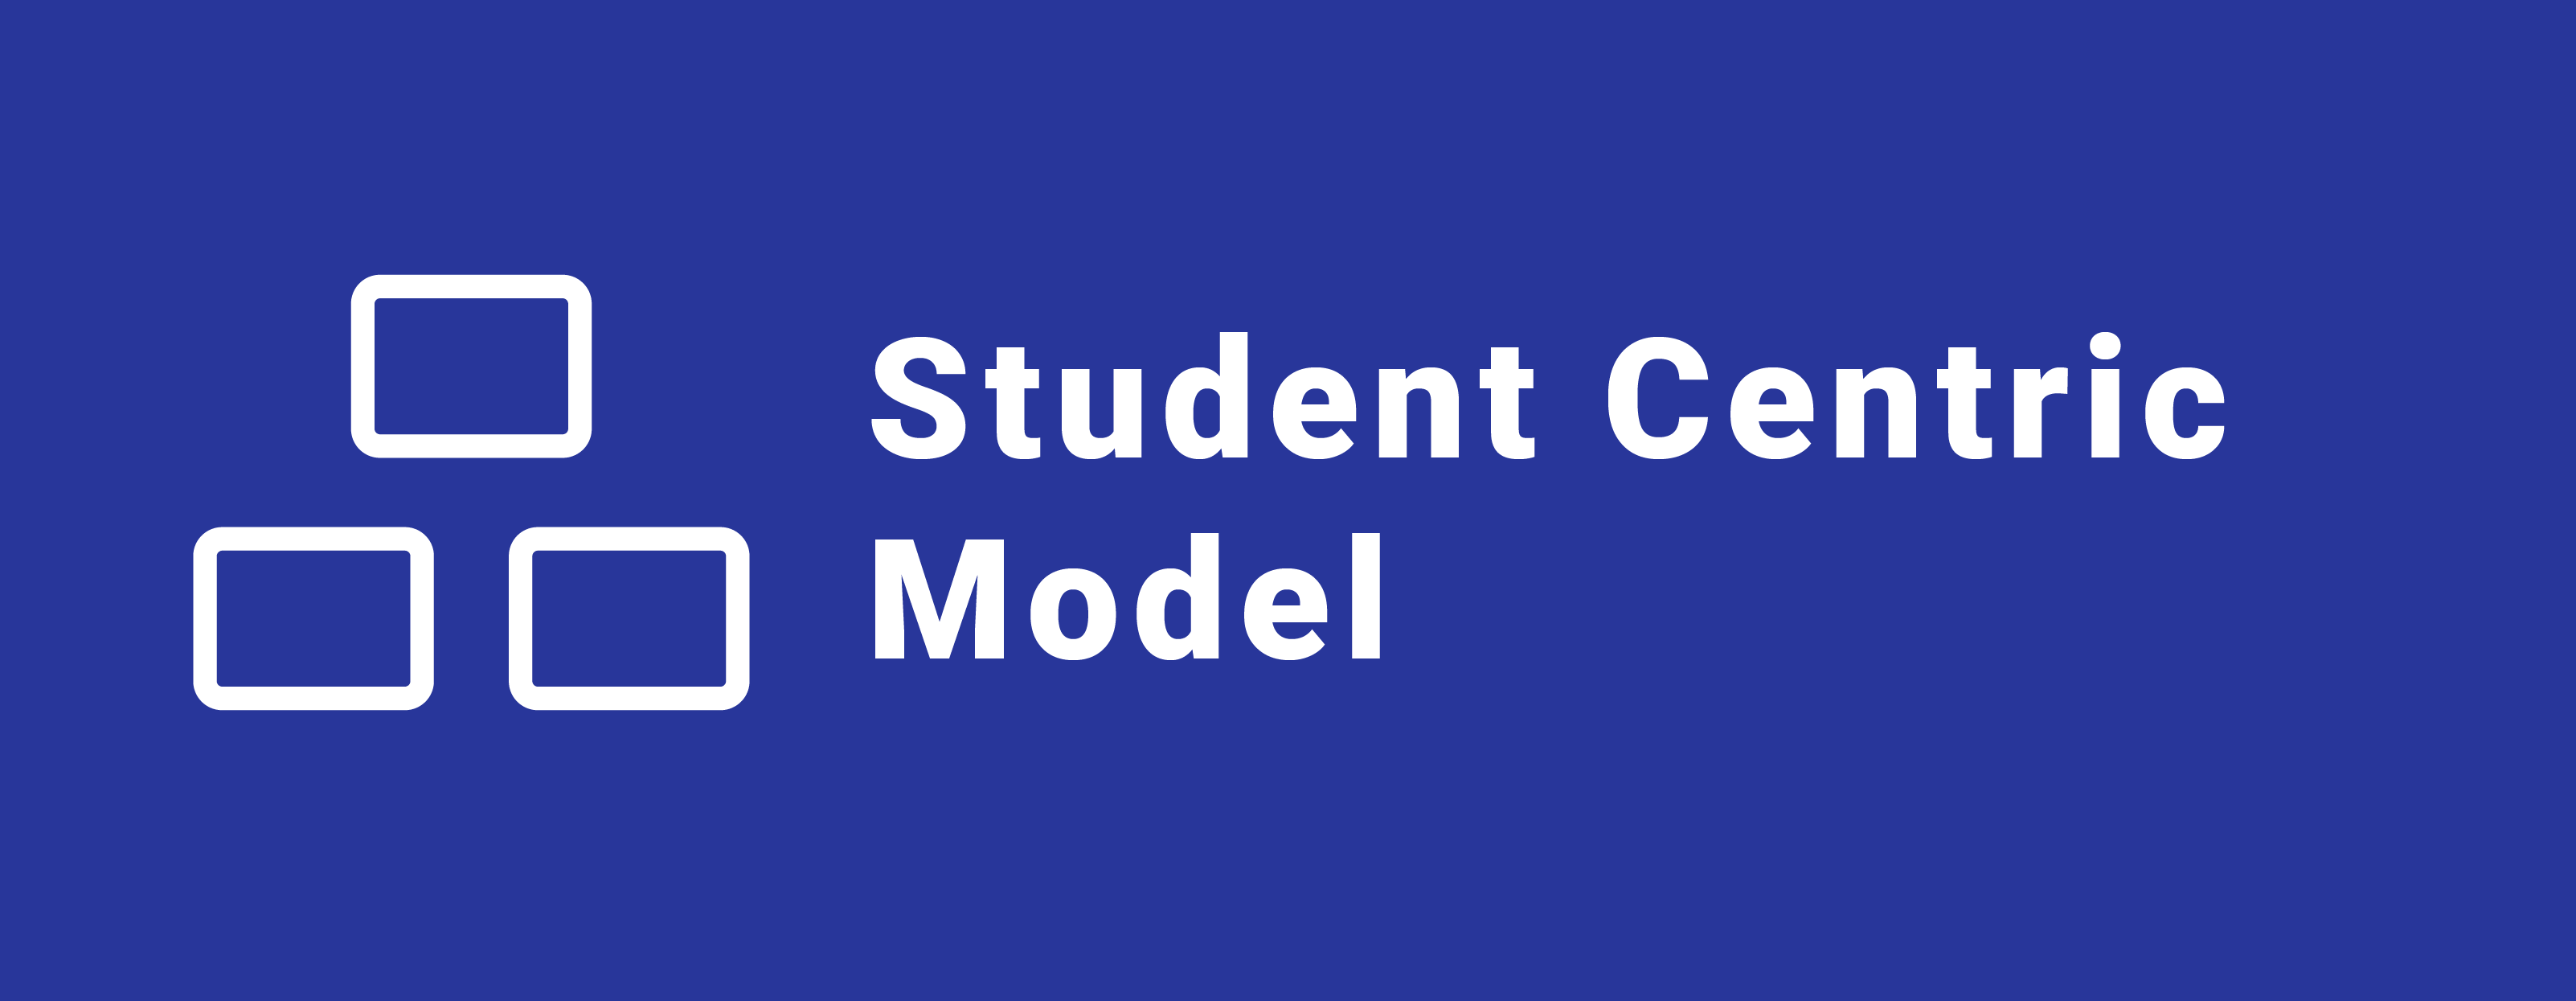 Student Centric Model